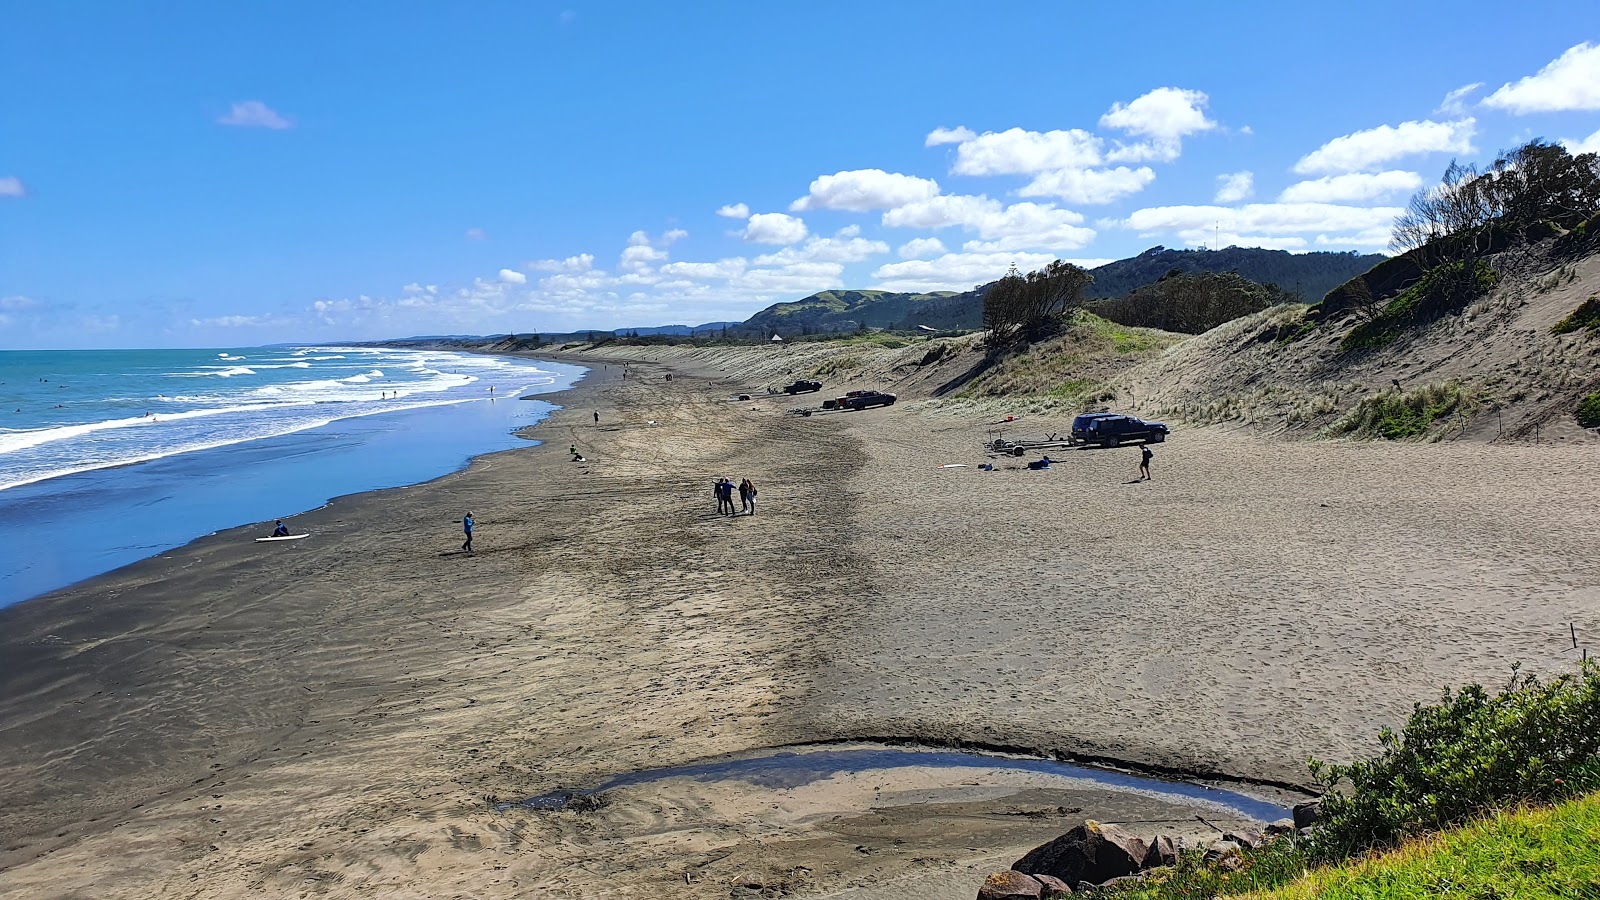 Foto af Muriwai Beach bakket op af klipperne